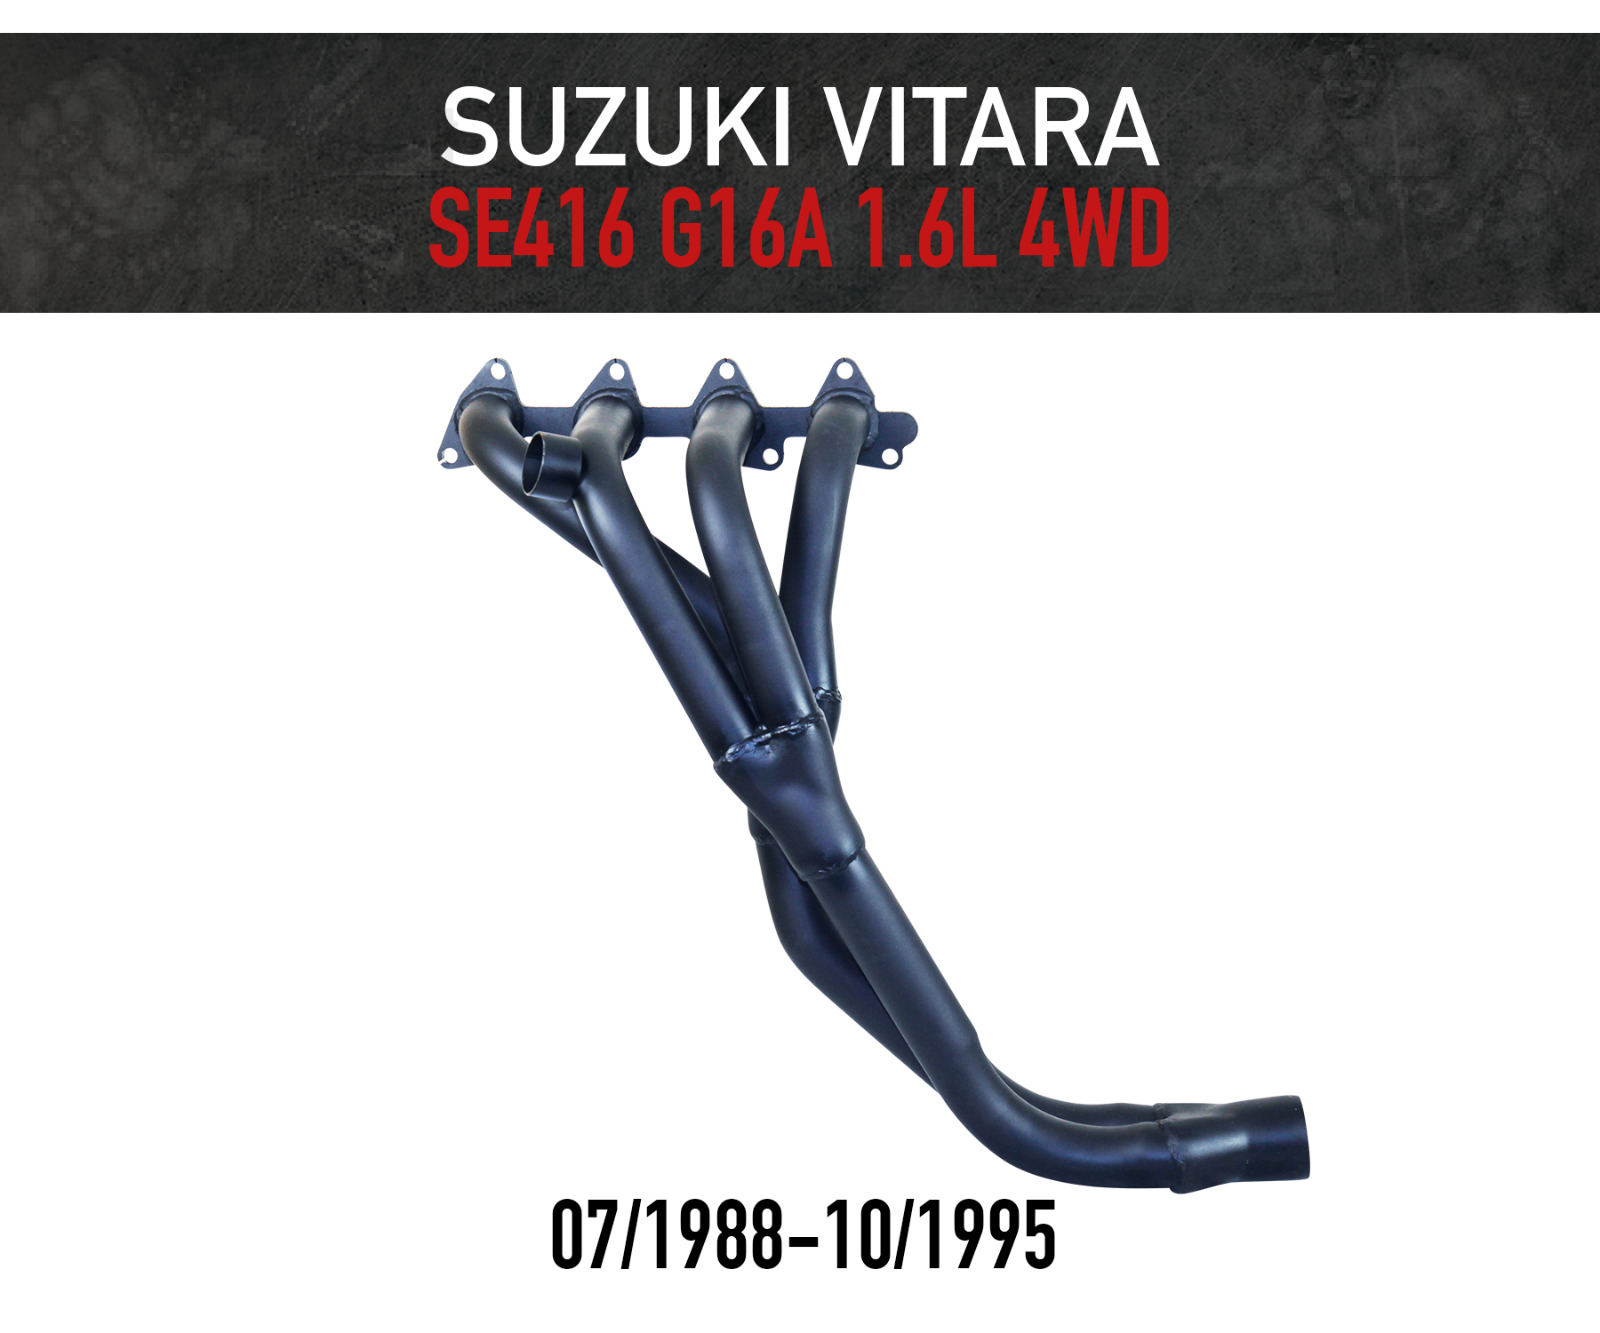 Headers / Extractors for Suzuki Vitara 4WD SE416 G16A 1.6L (1988-1996)